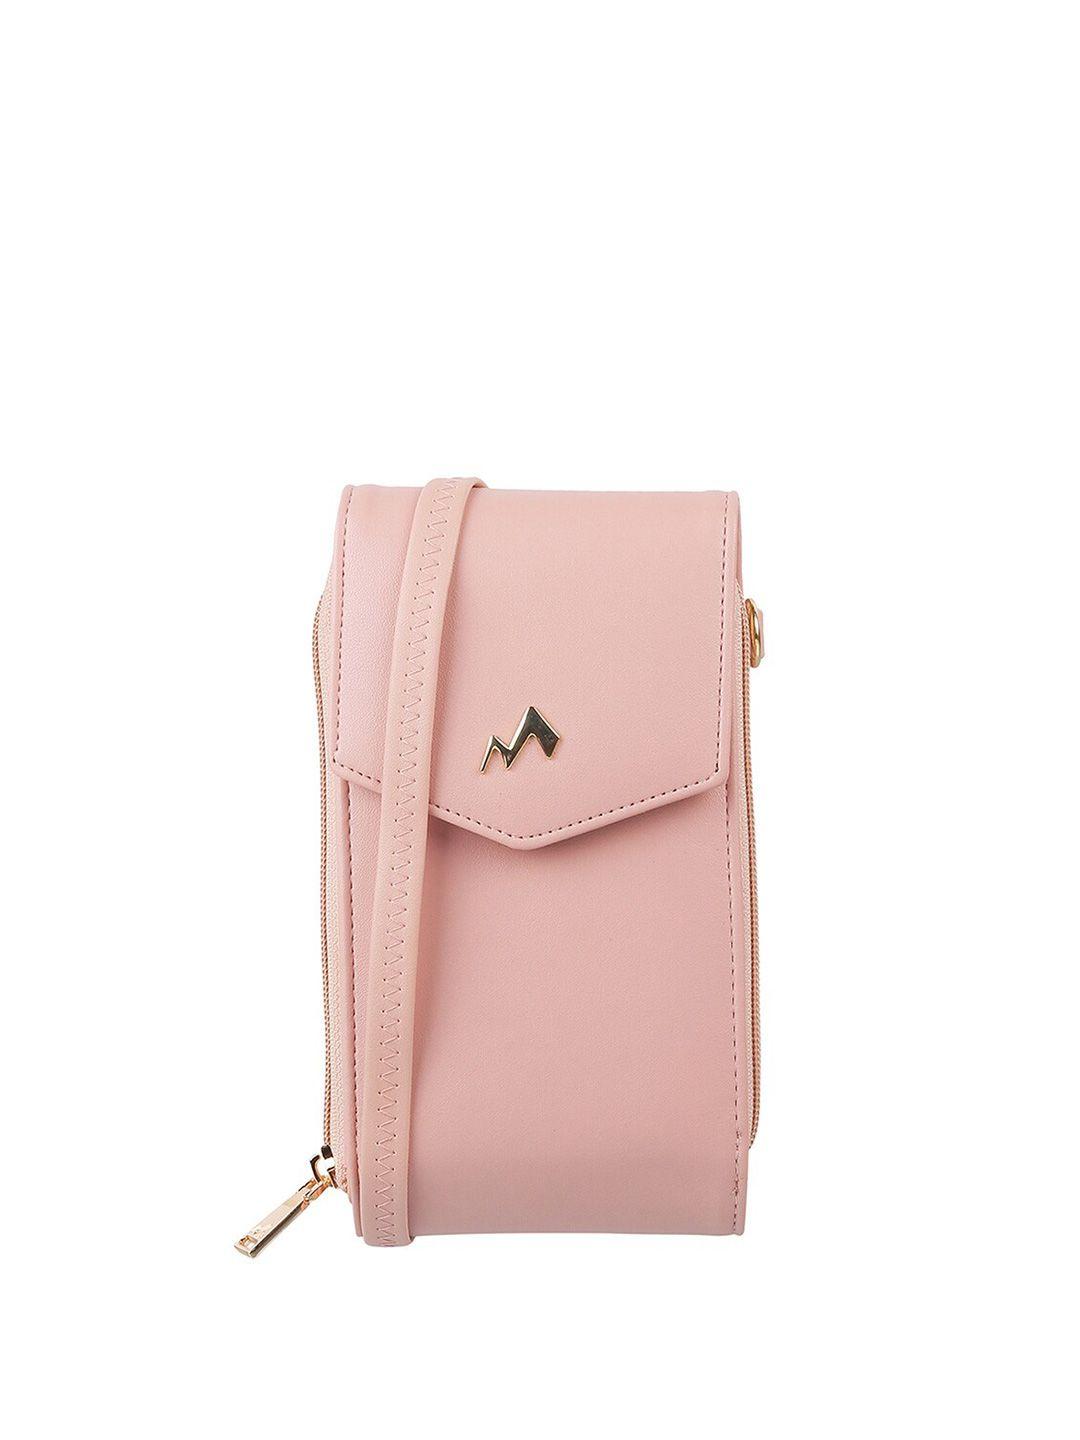 metro pink purse clutch